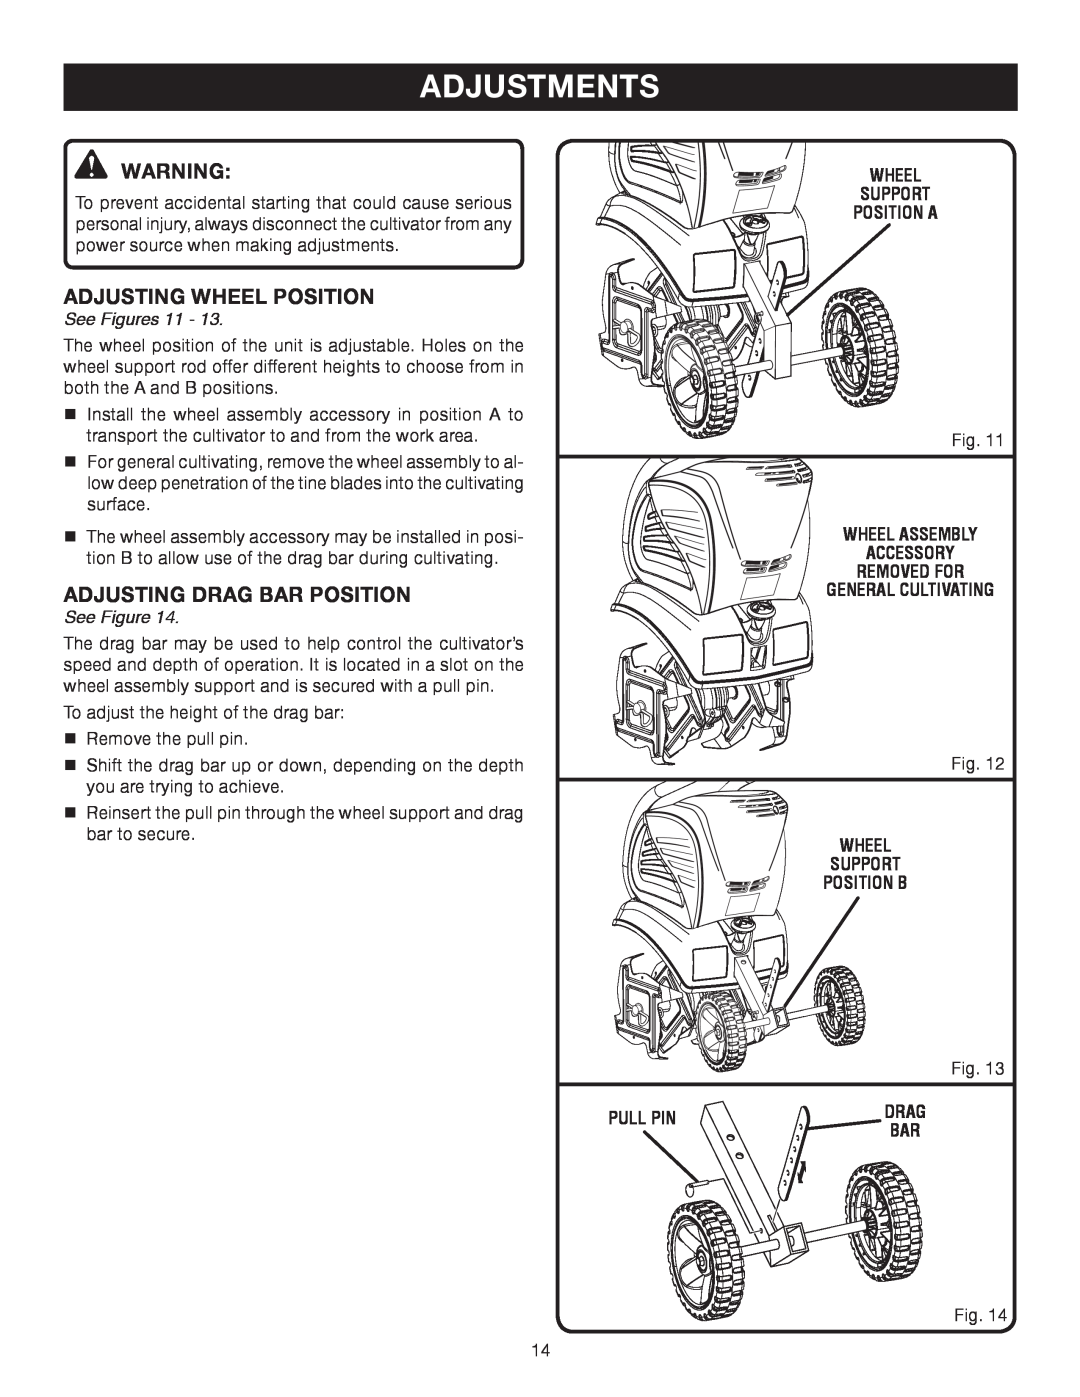 Ryobi Outdoor RY46501B manual Adjustments, Adjusting Wheel Position, Adjusting Drag Bar Position, See Figures, Pull Pin 